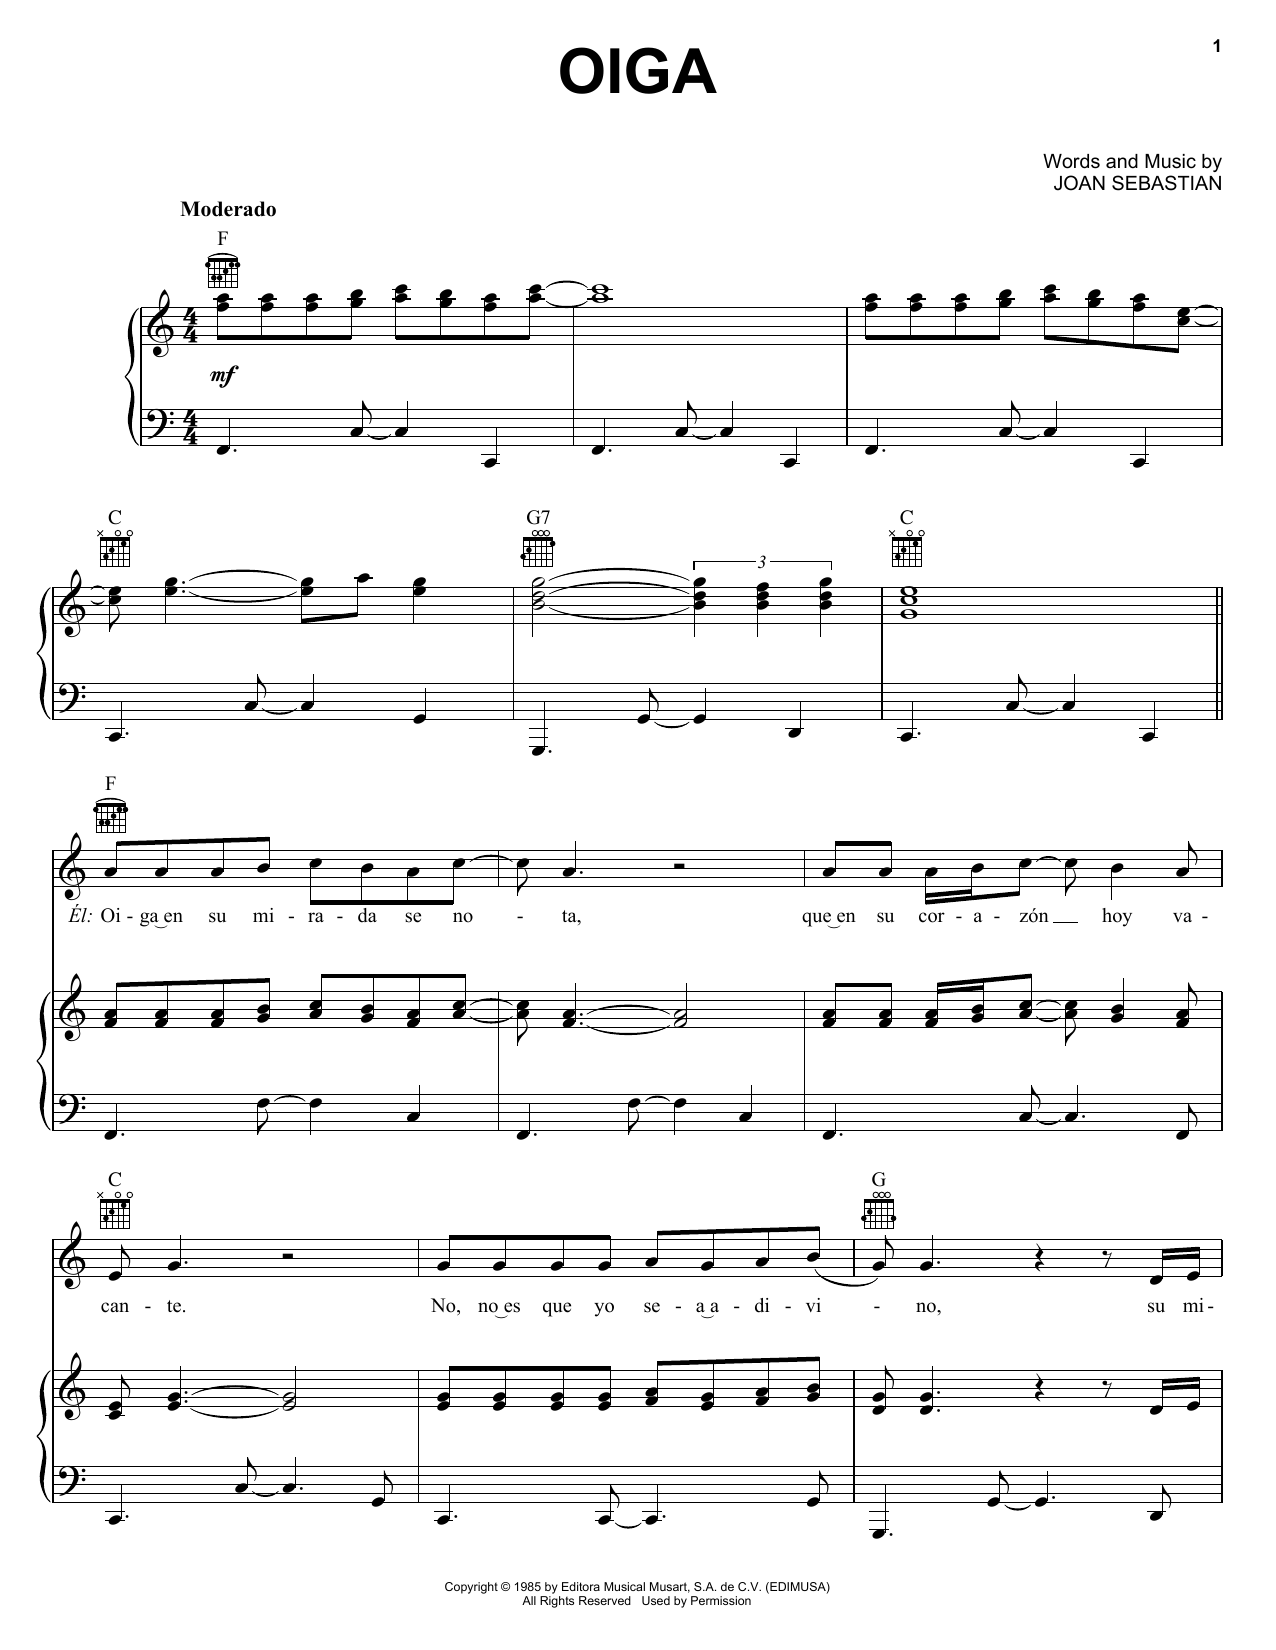 Joan Sebastian Oiga Sheet Music Notes & Chords for Piano, Vocal & Guitar (Right-Hand Melody) - Download or Print PDF